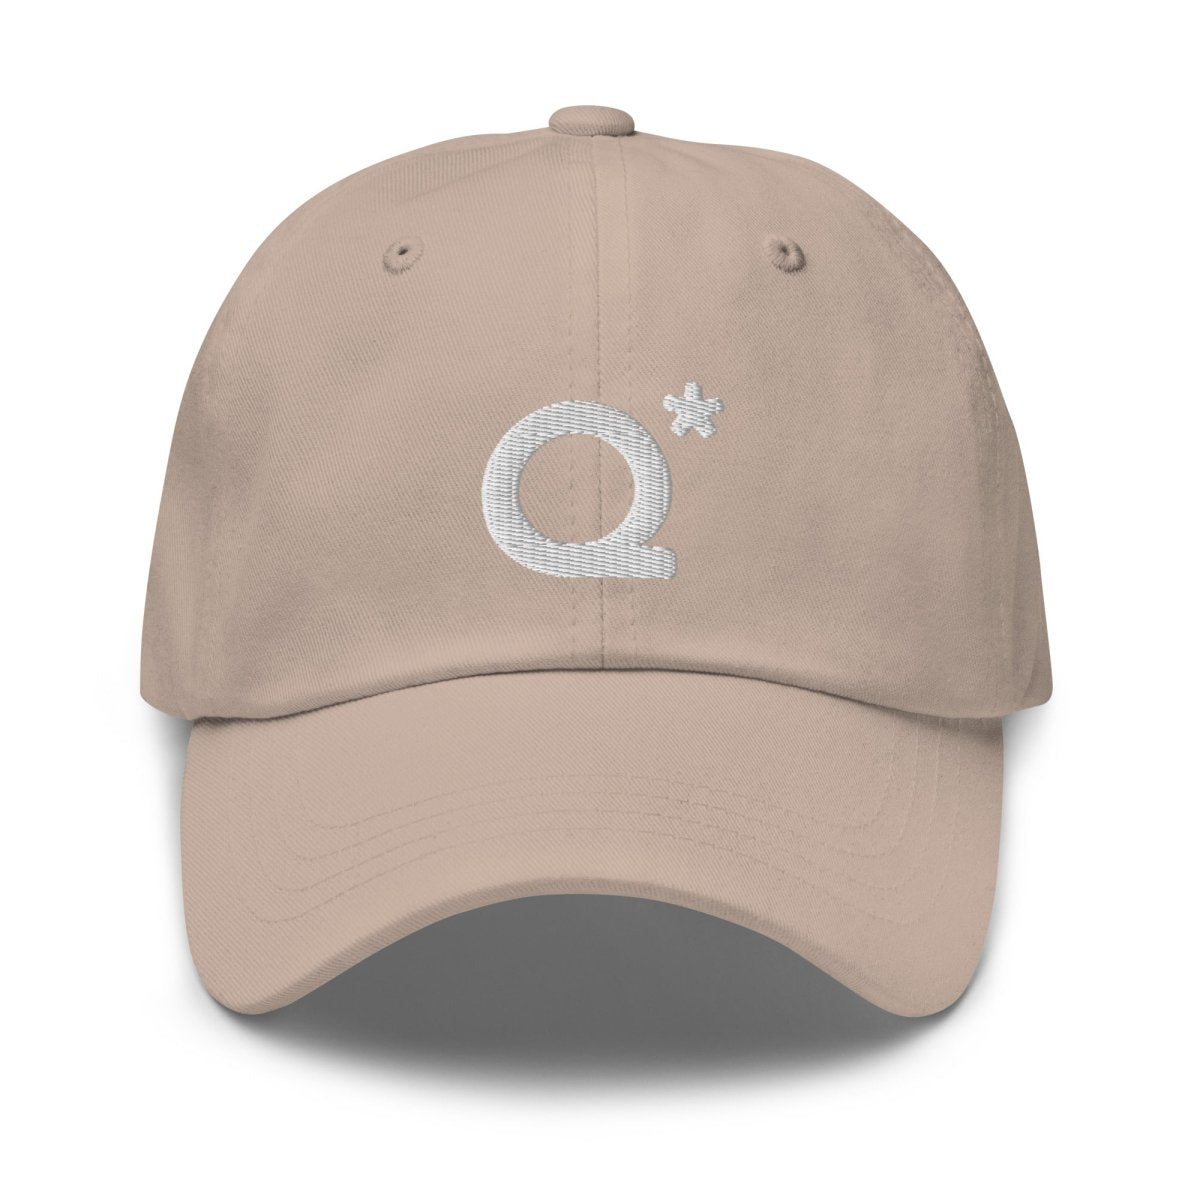 Q* (Q - Star) Embroidered Cap 1 - Stone - AI Store